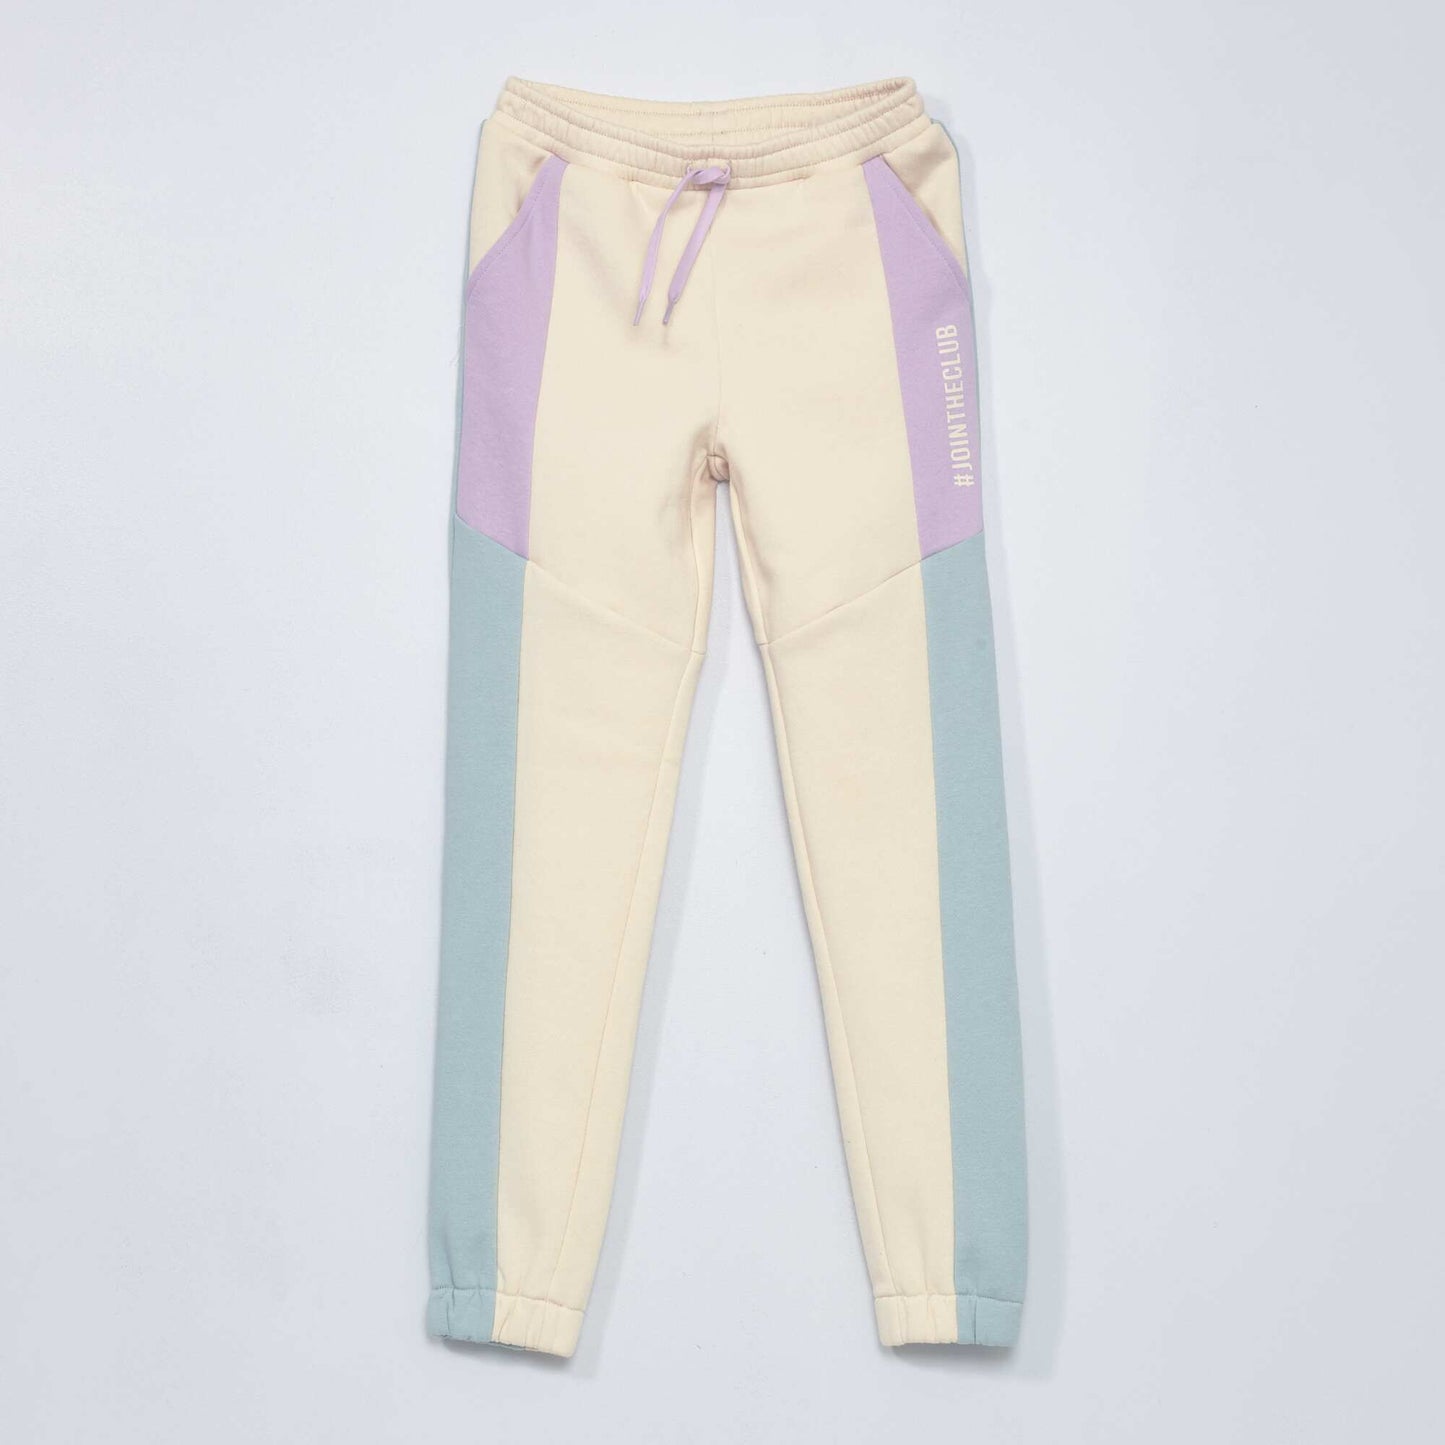 Pantalon jogging colorblock Beige/violet/bleu